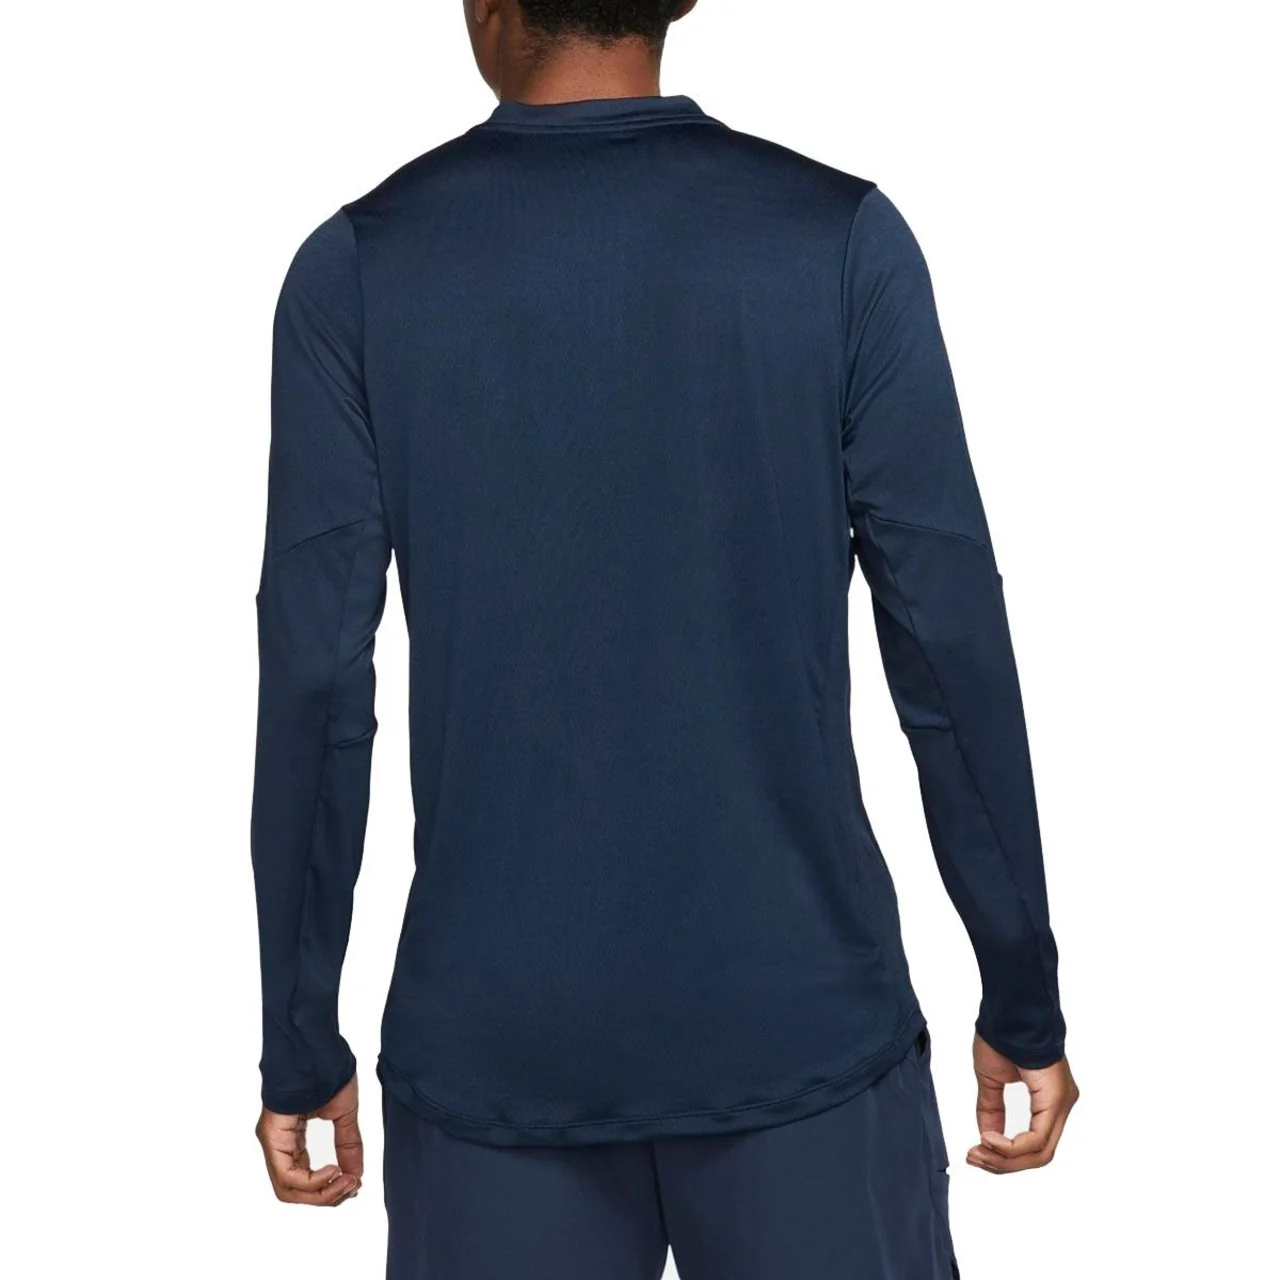 Nike Dri-Fit Advantage Long Sleeve Shirt Navy Blue